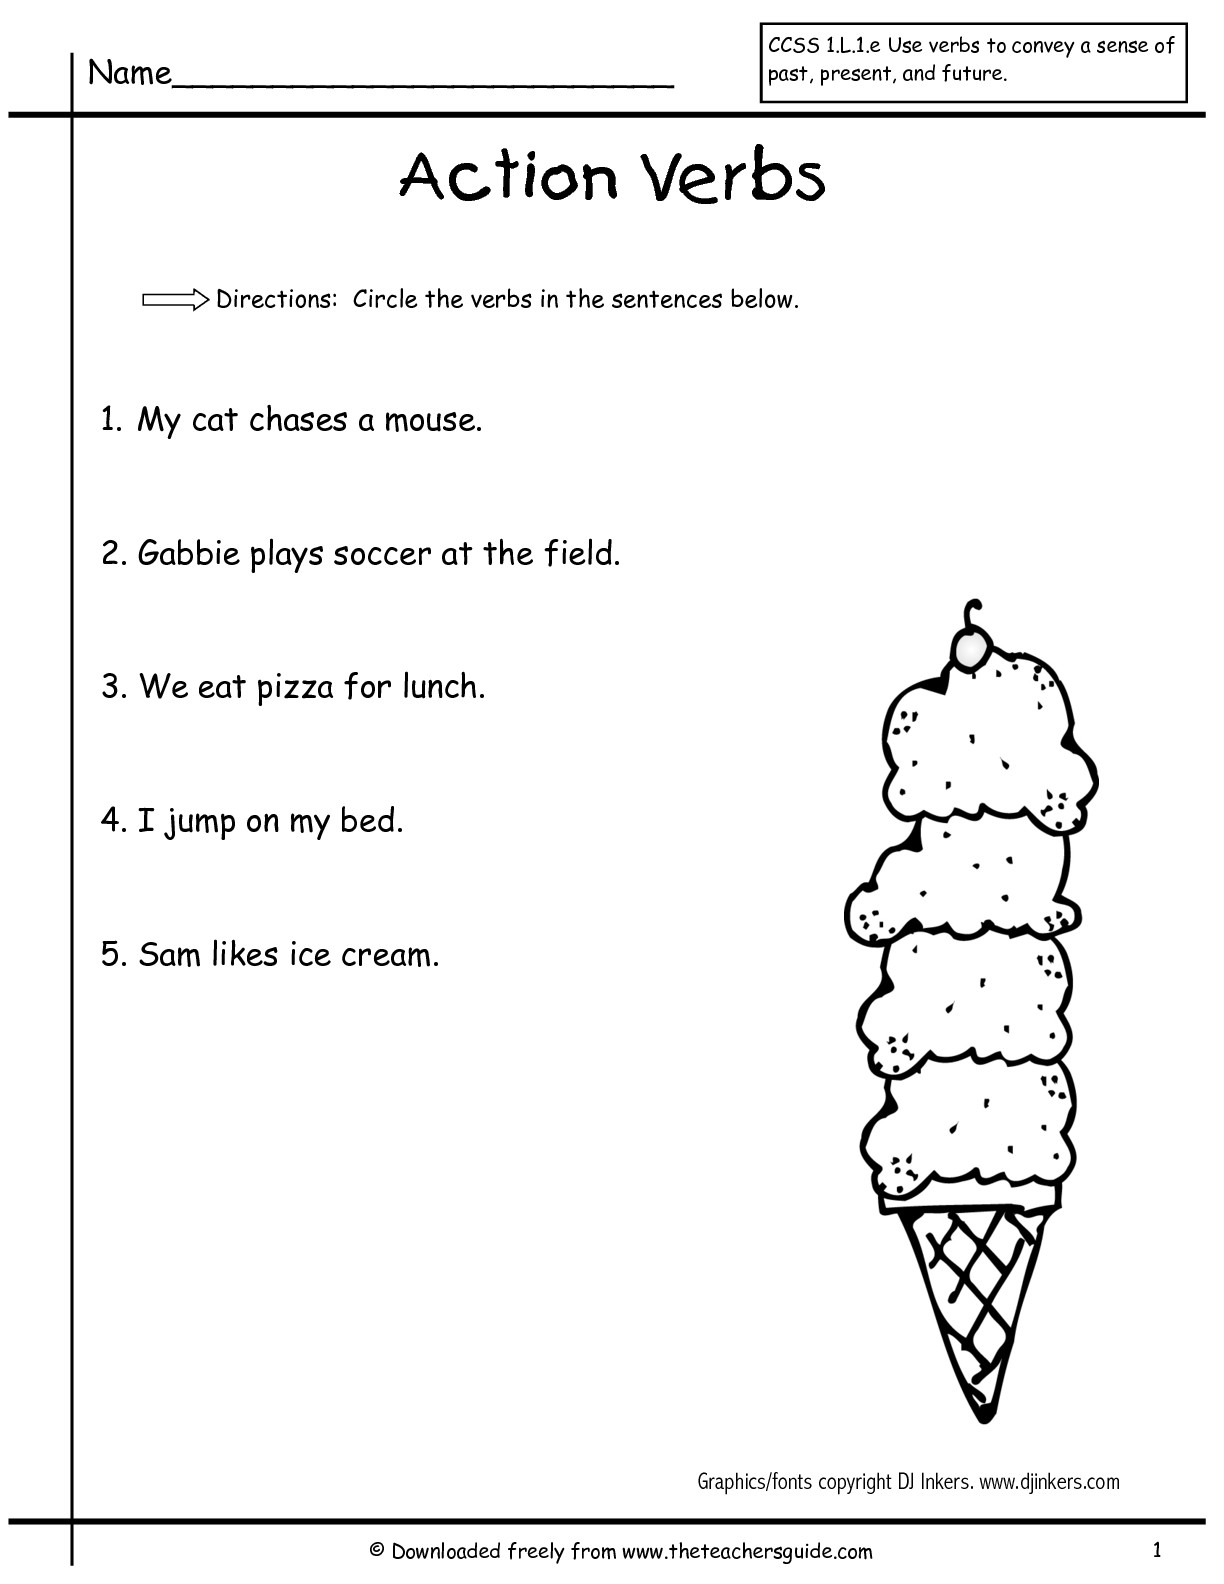 action-verbs-writing-interactive-worksheet